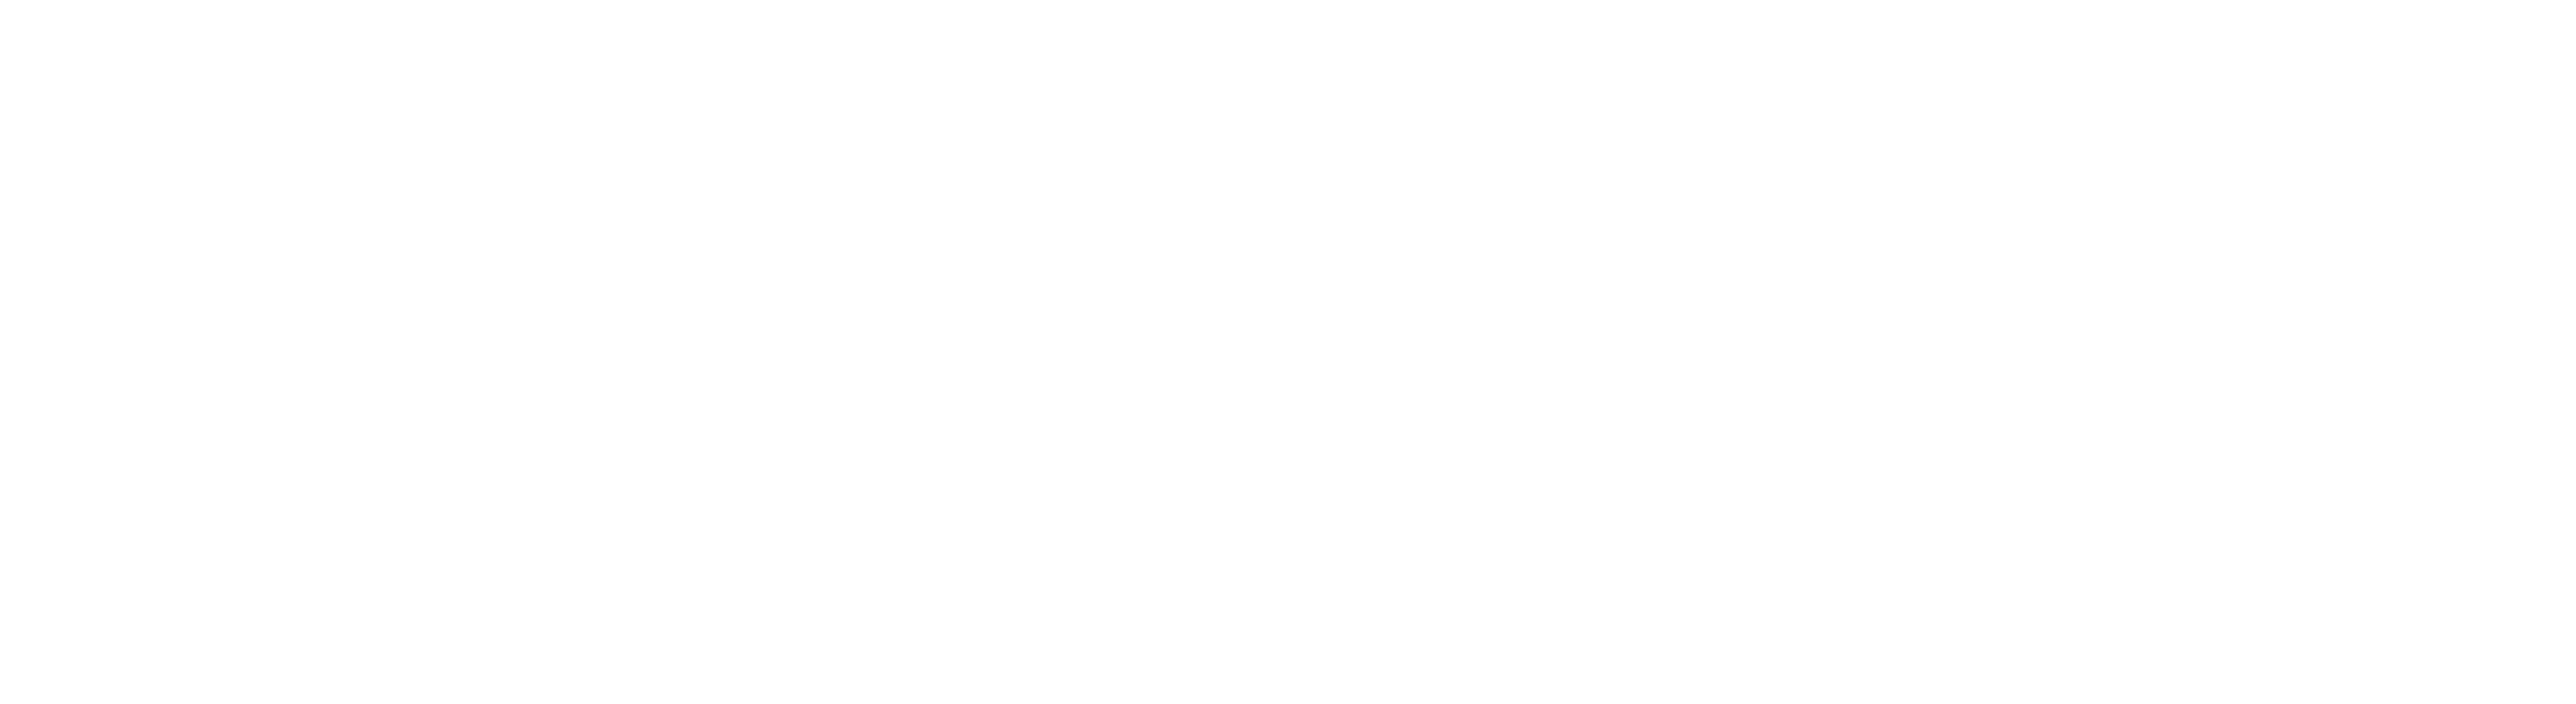 Rev muscle cars glitch logo white transparentbg